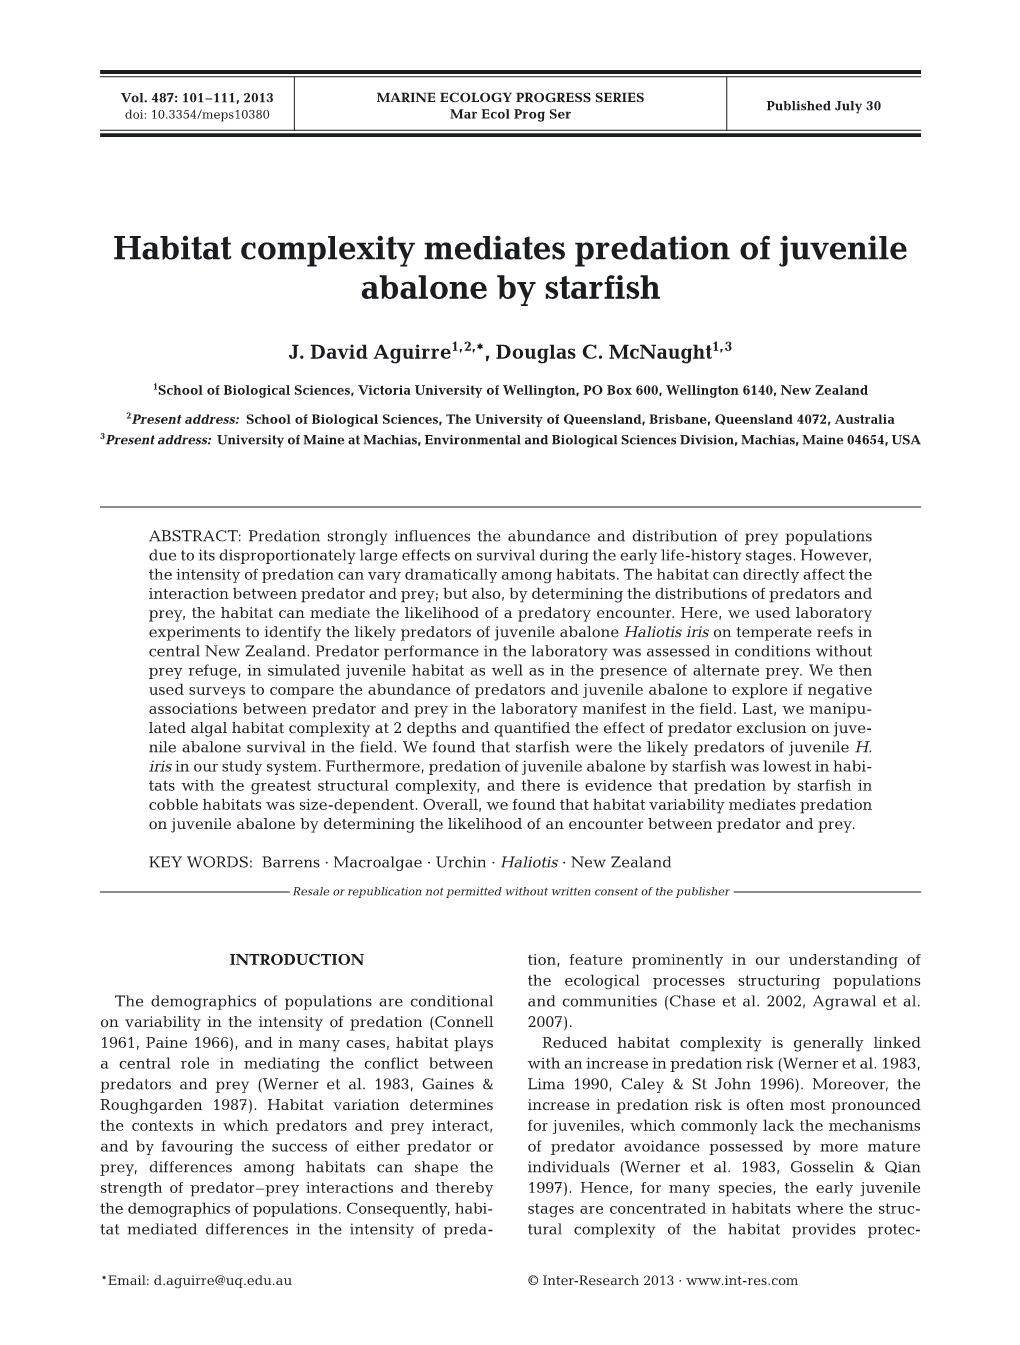 Habitat Complexity Mediates Predation of Juvenile Abalone by Starfish